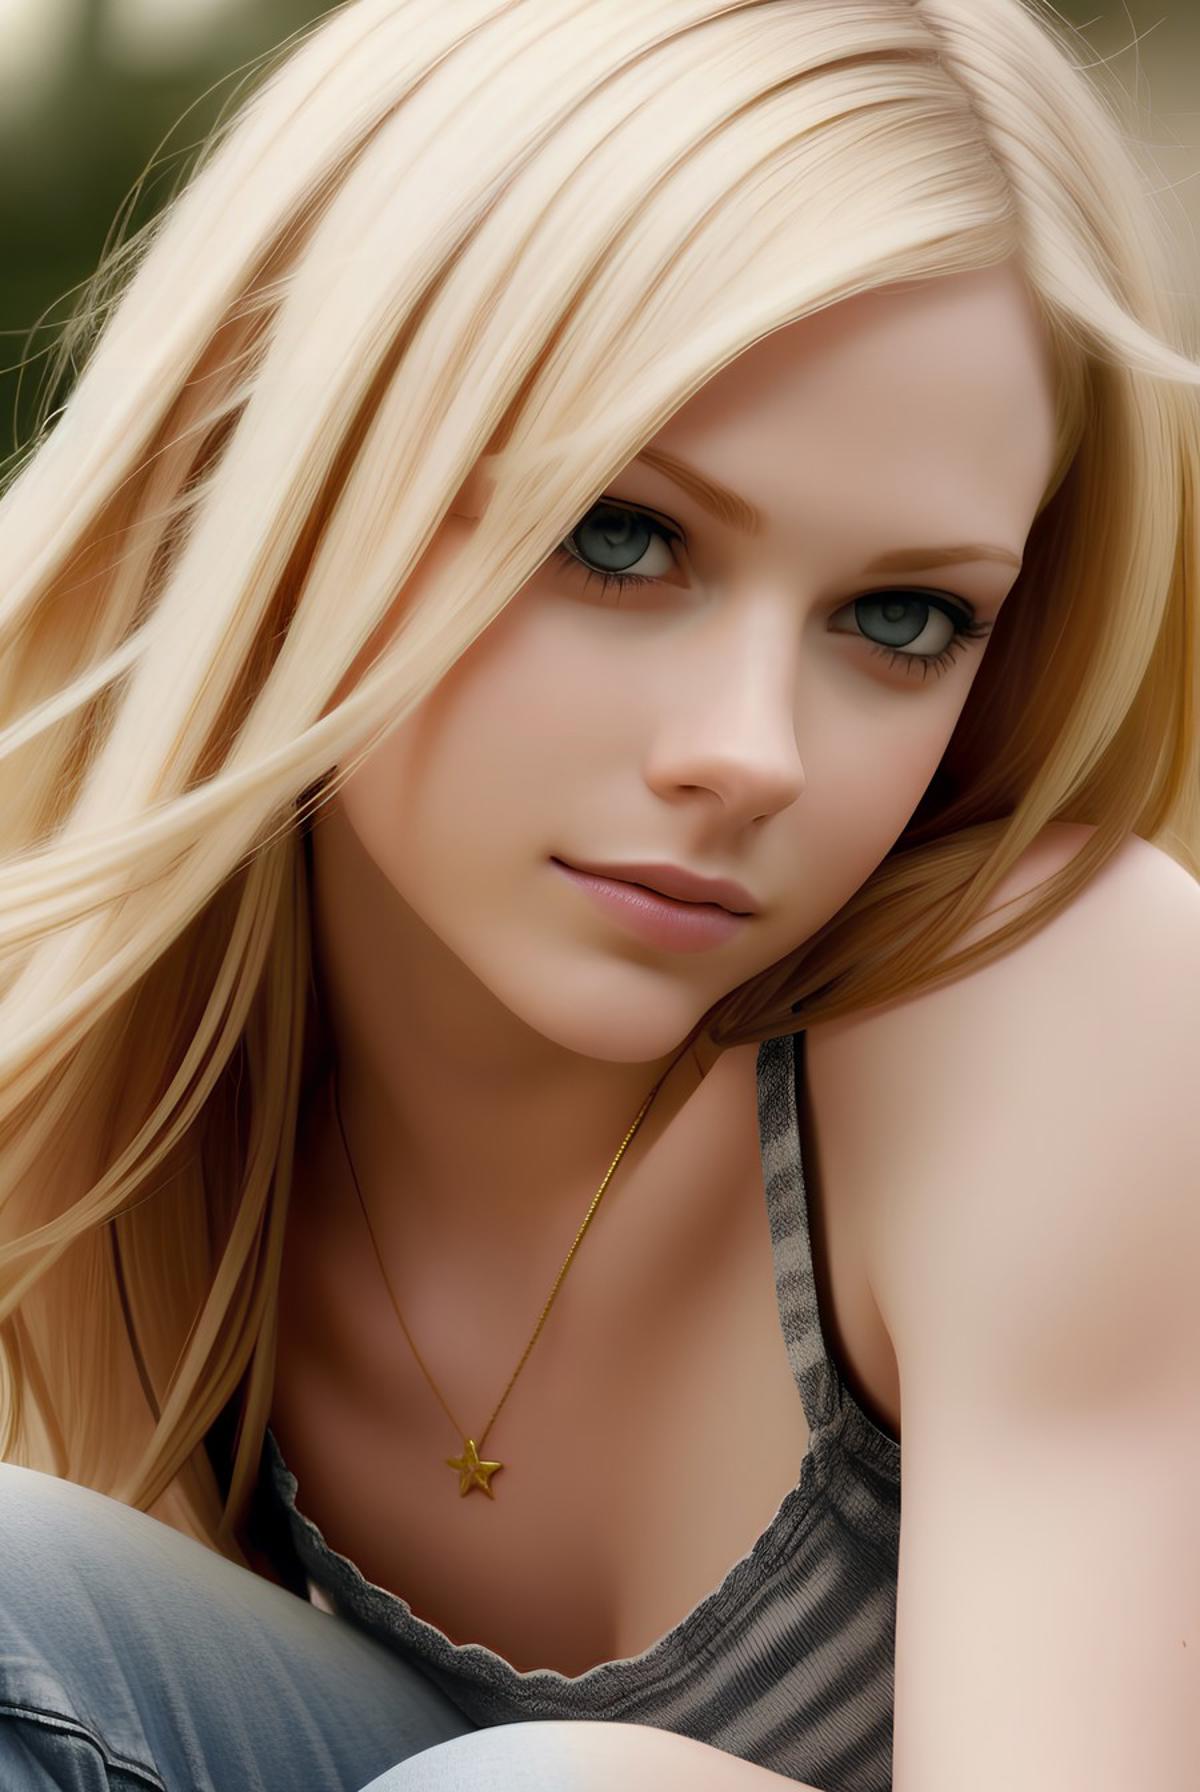 Avril Lavigne - Embedding image by MzMaXaM